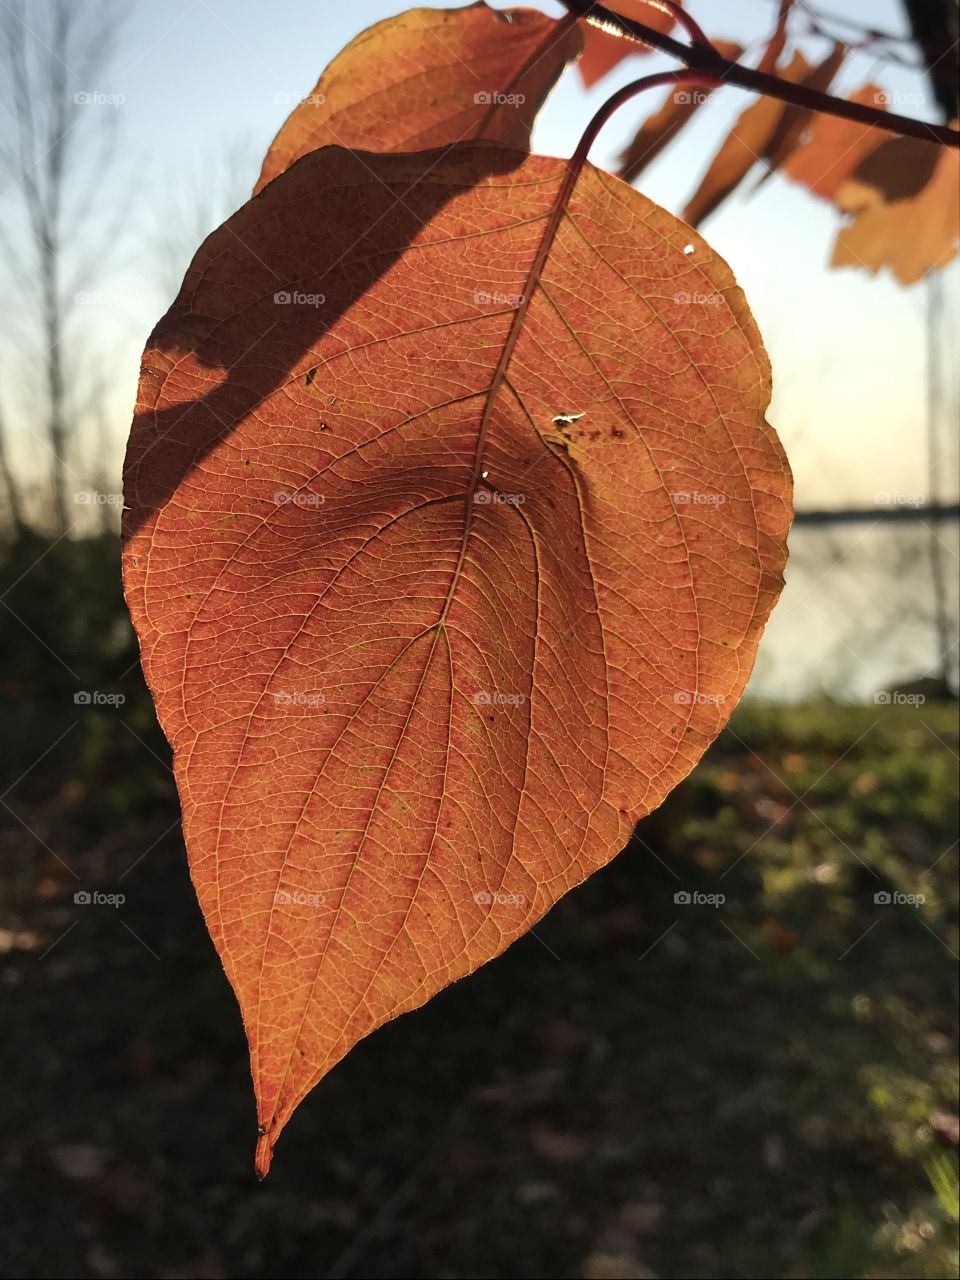 Closeup of an orange Fall leaf